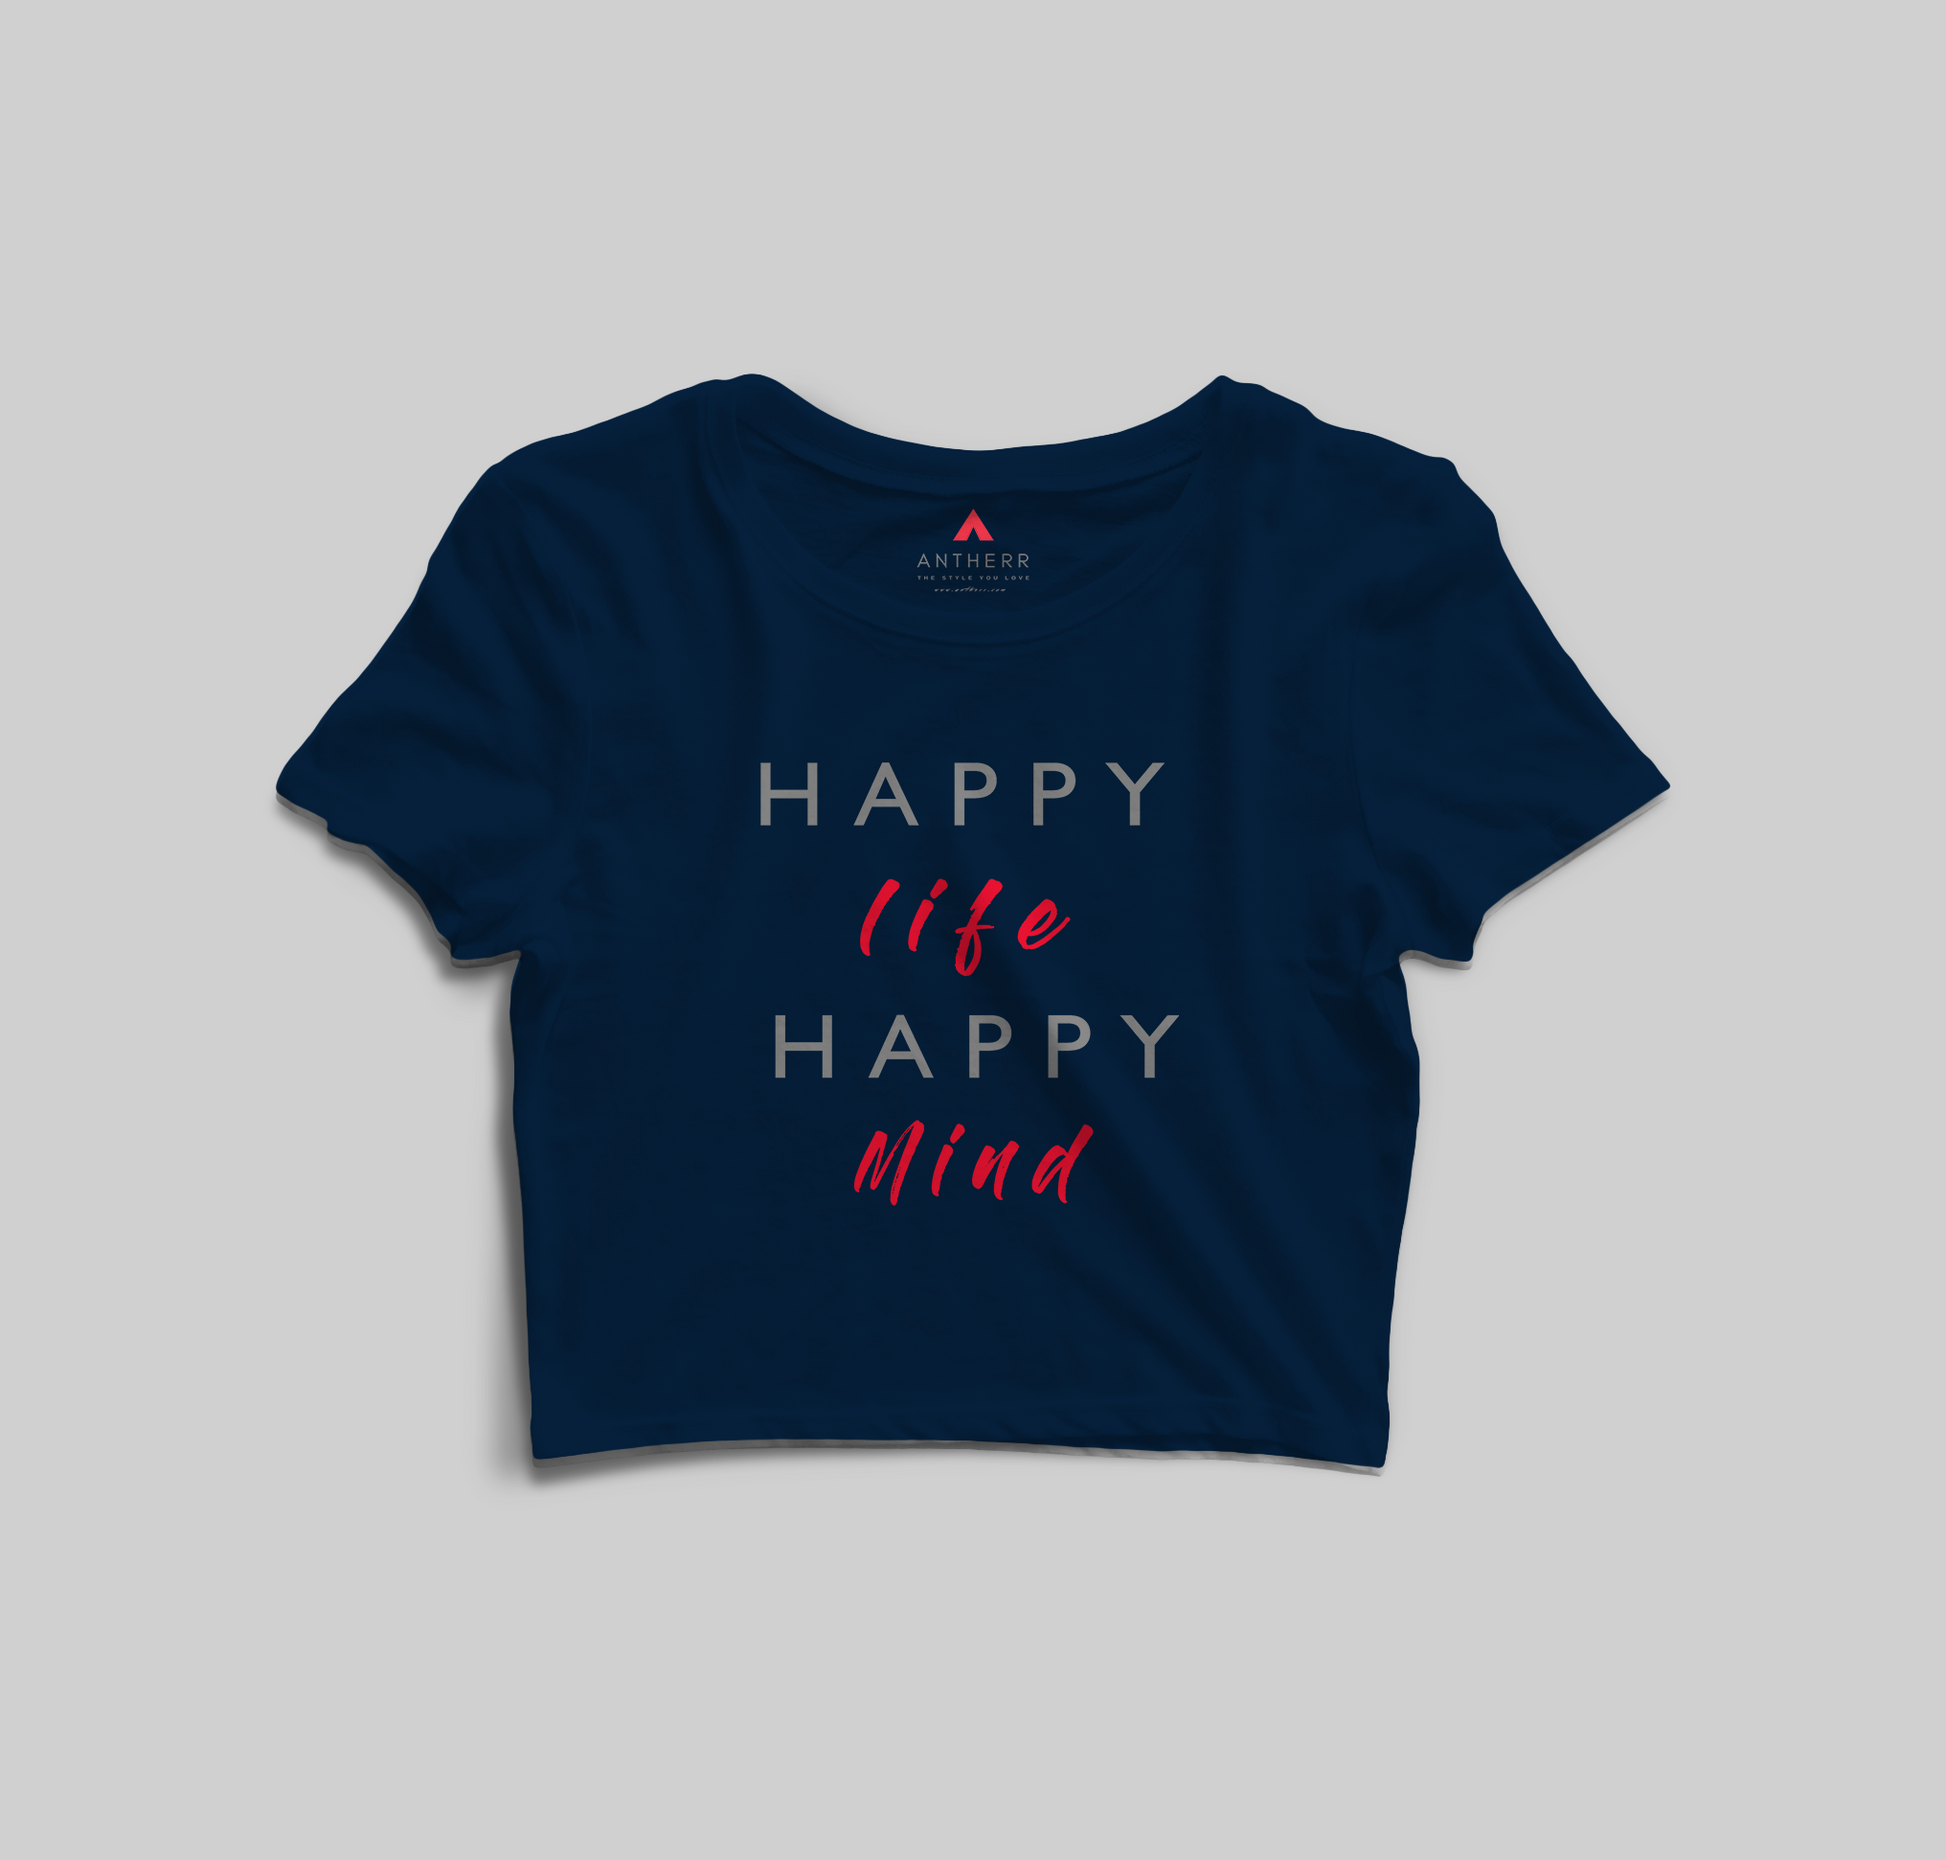 "HAPPY LIFE HAPPY MIND" - HALF-SLEEVE CROP TOPS NAVY-BLUE